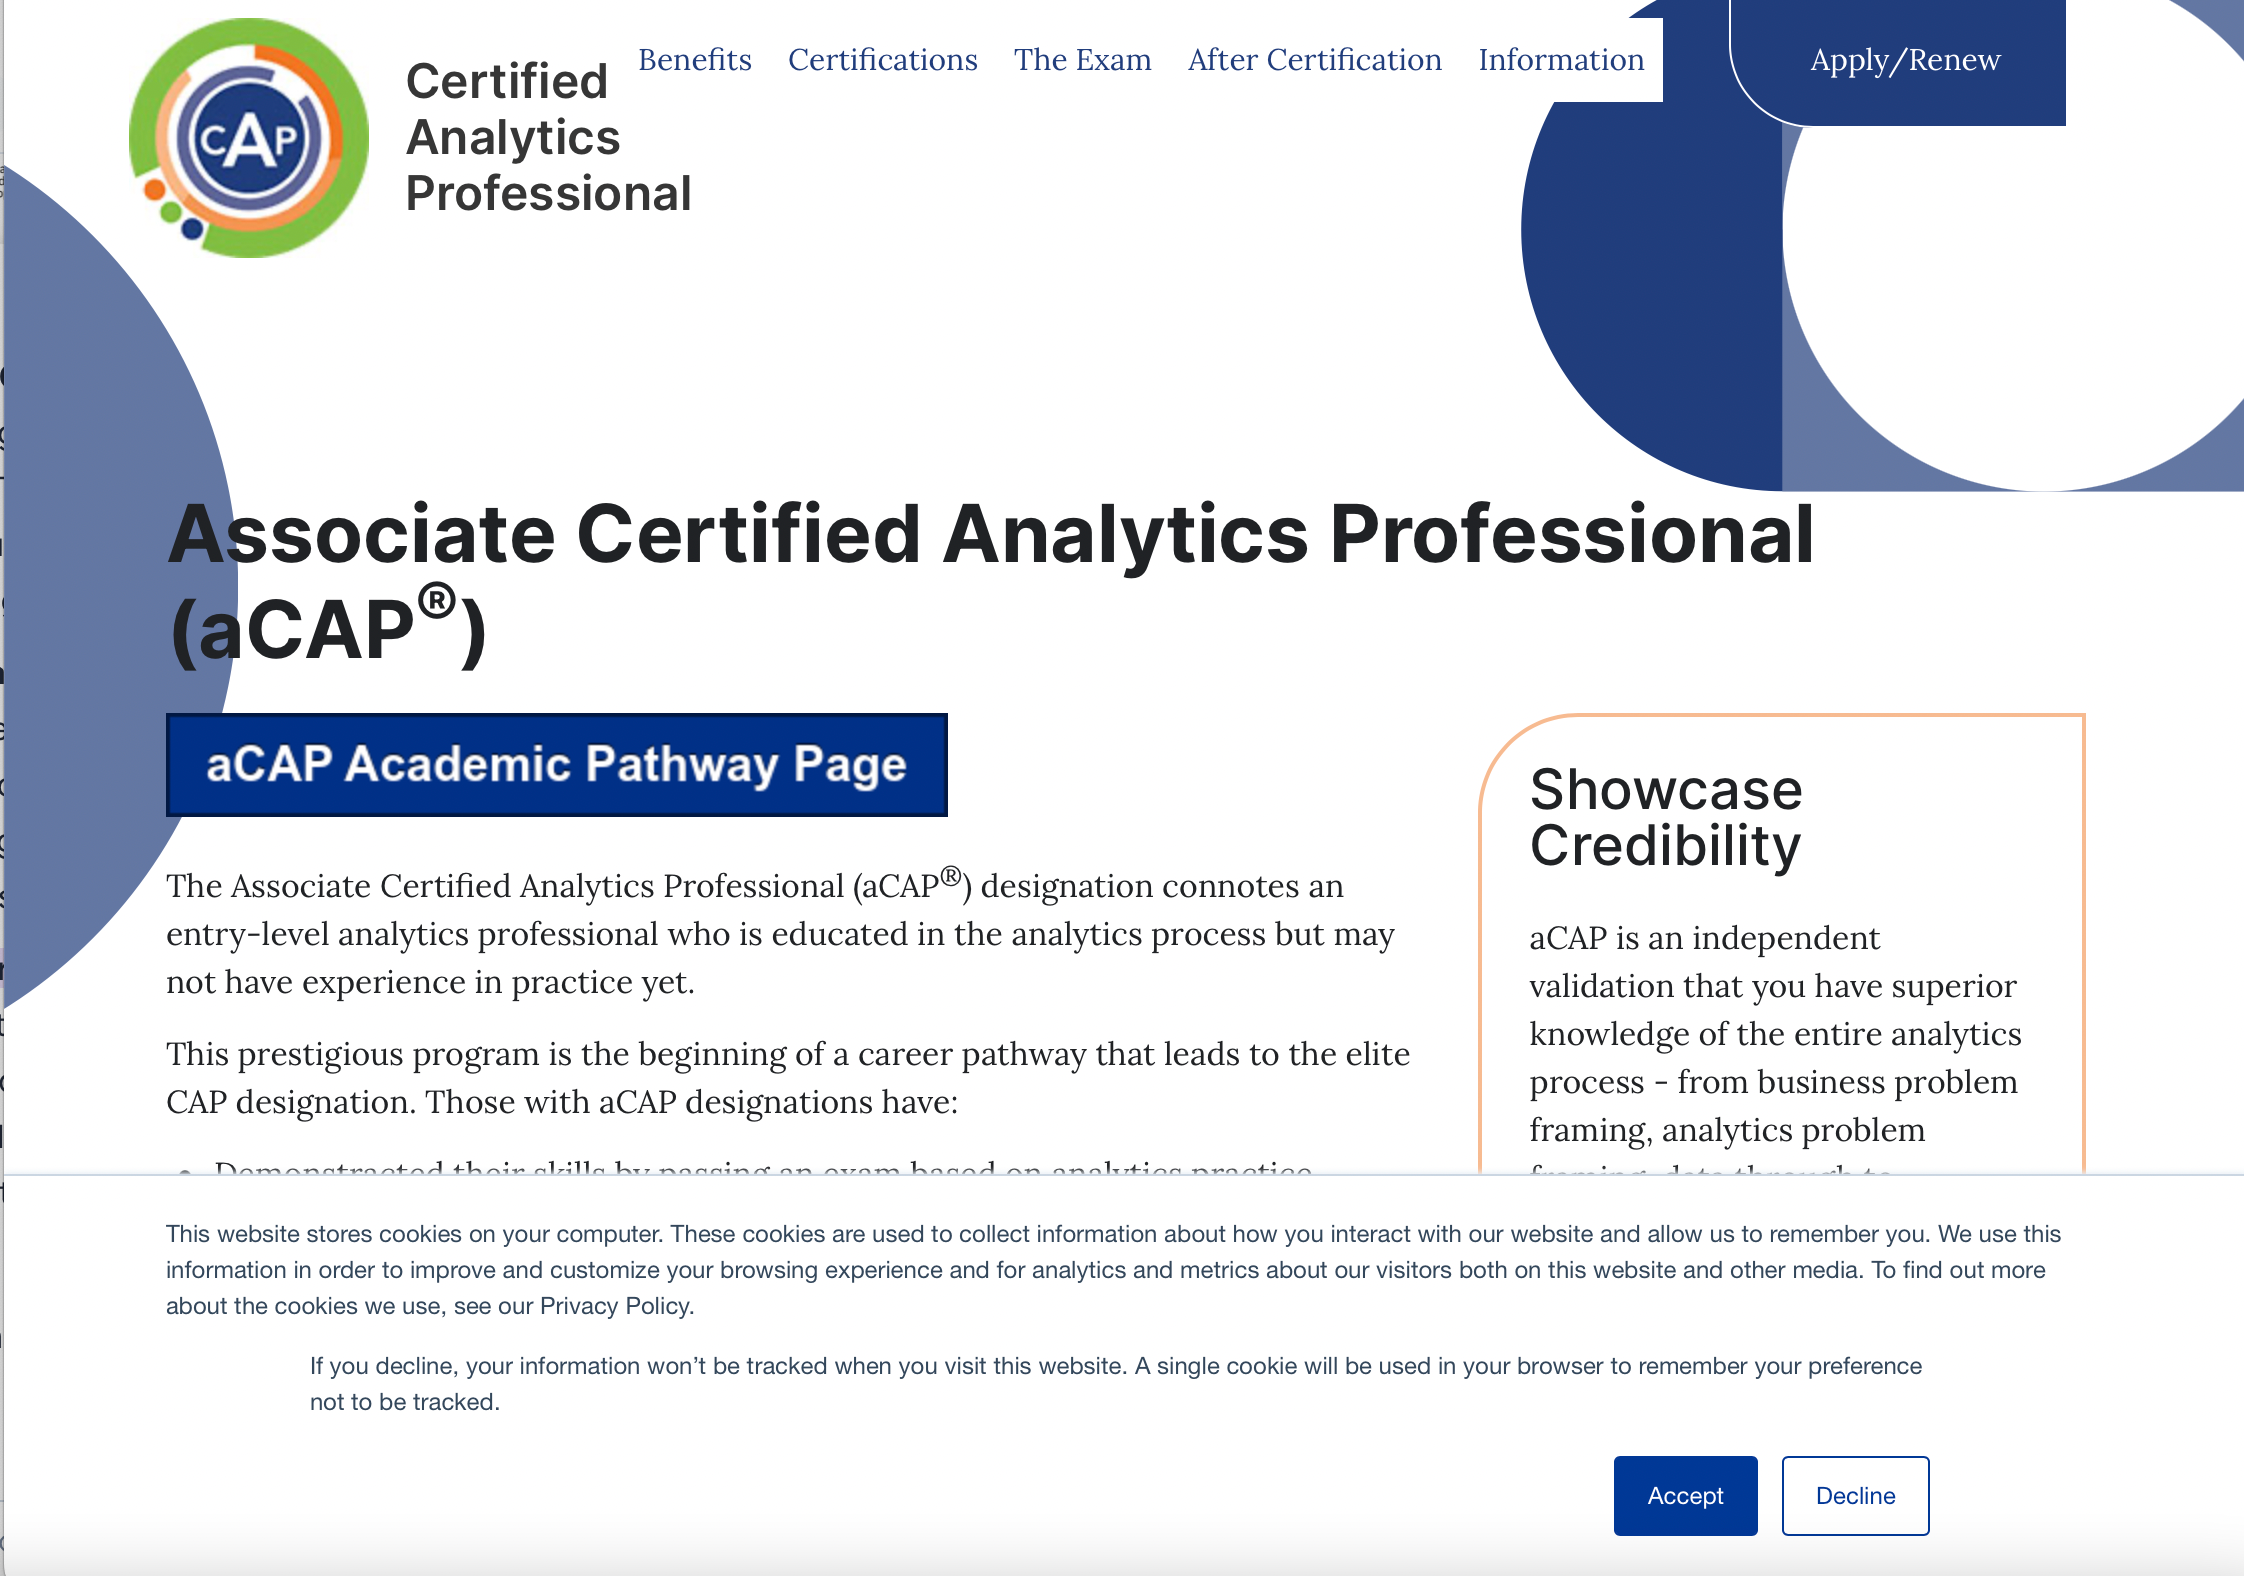 Associate Certified Analytics Professional (aCAP) homepage